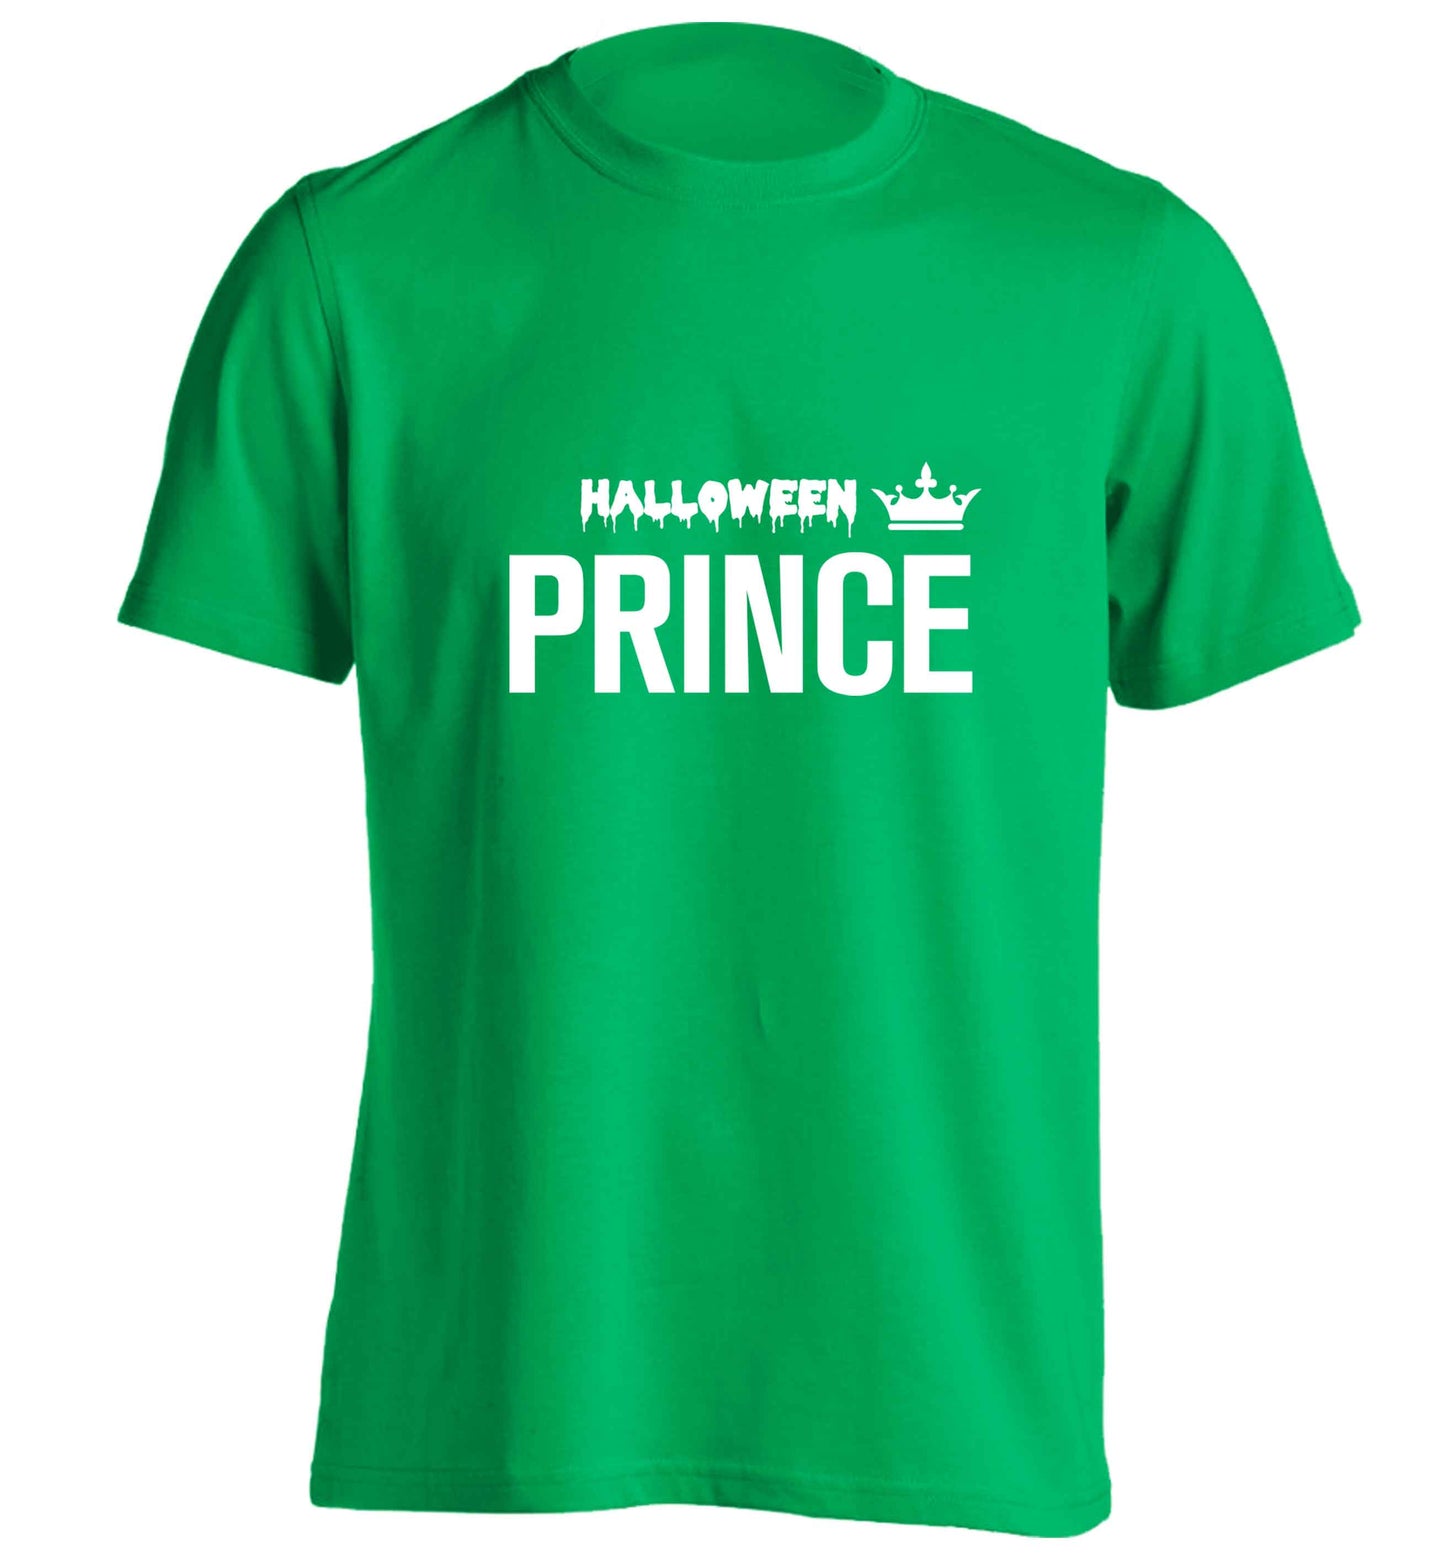 Halloween prince adults unisex green Tshirt 2XL